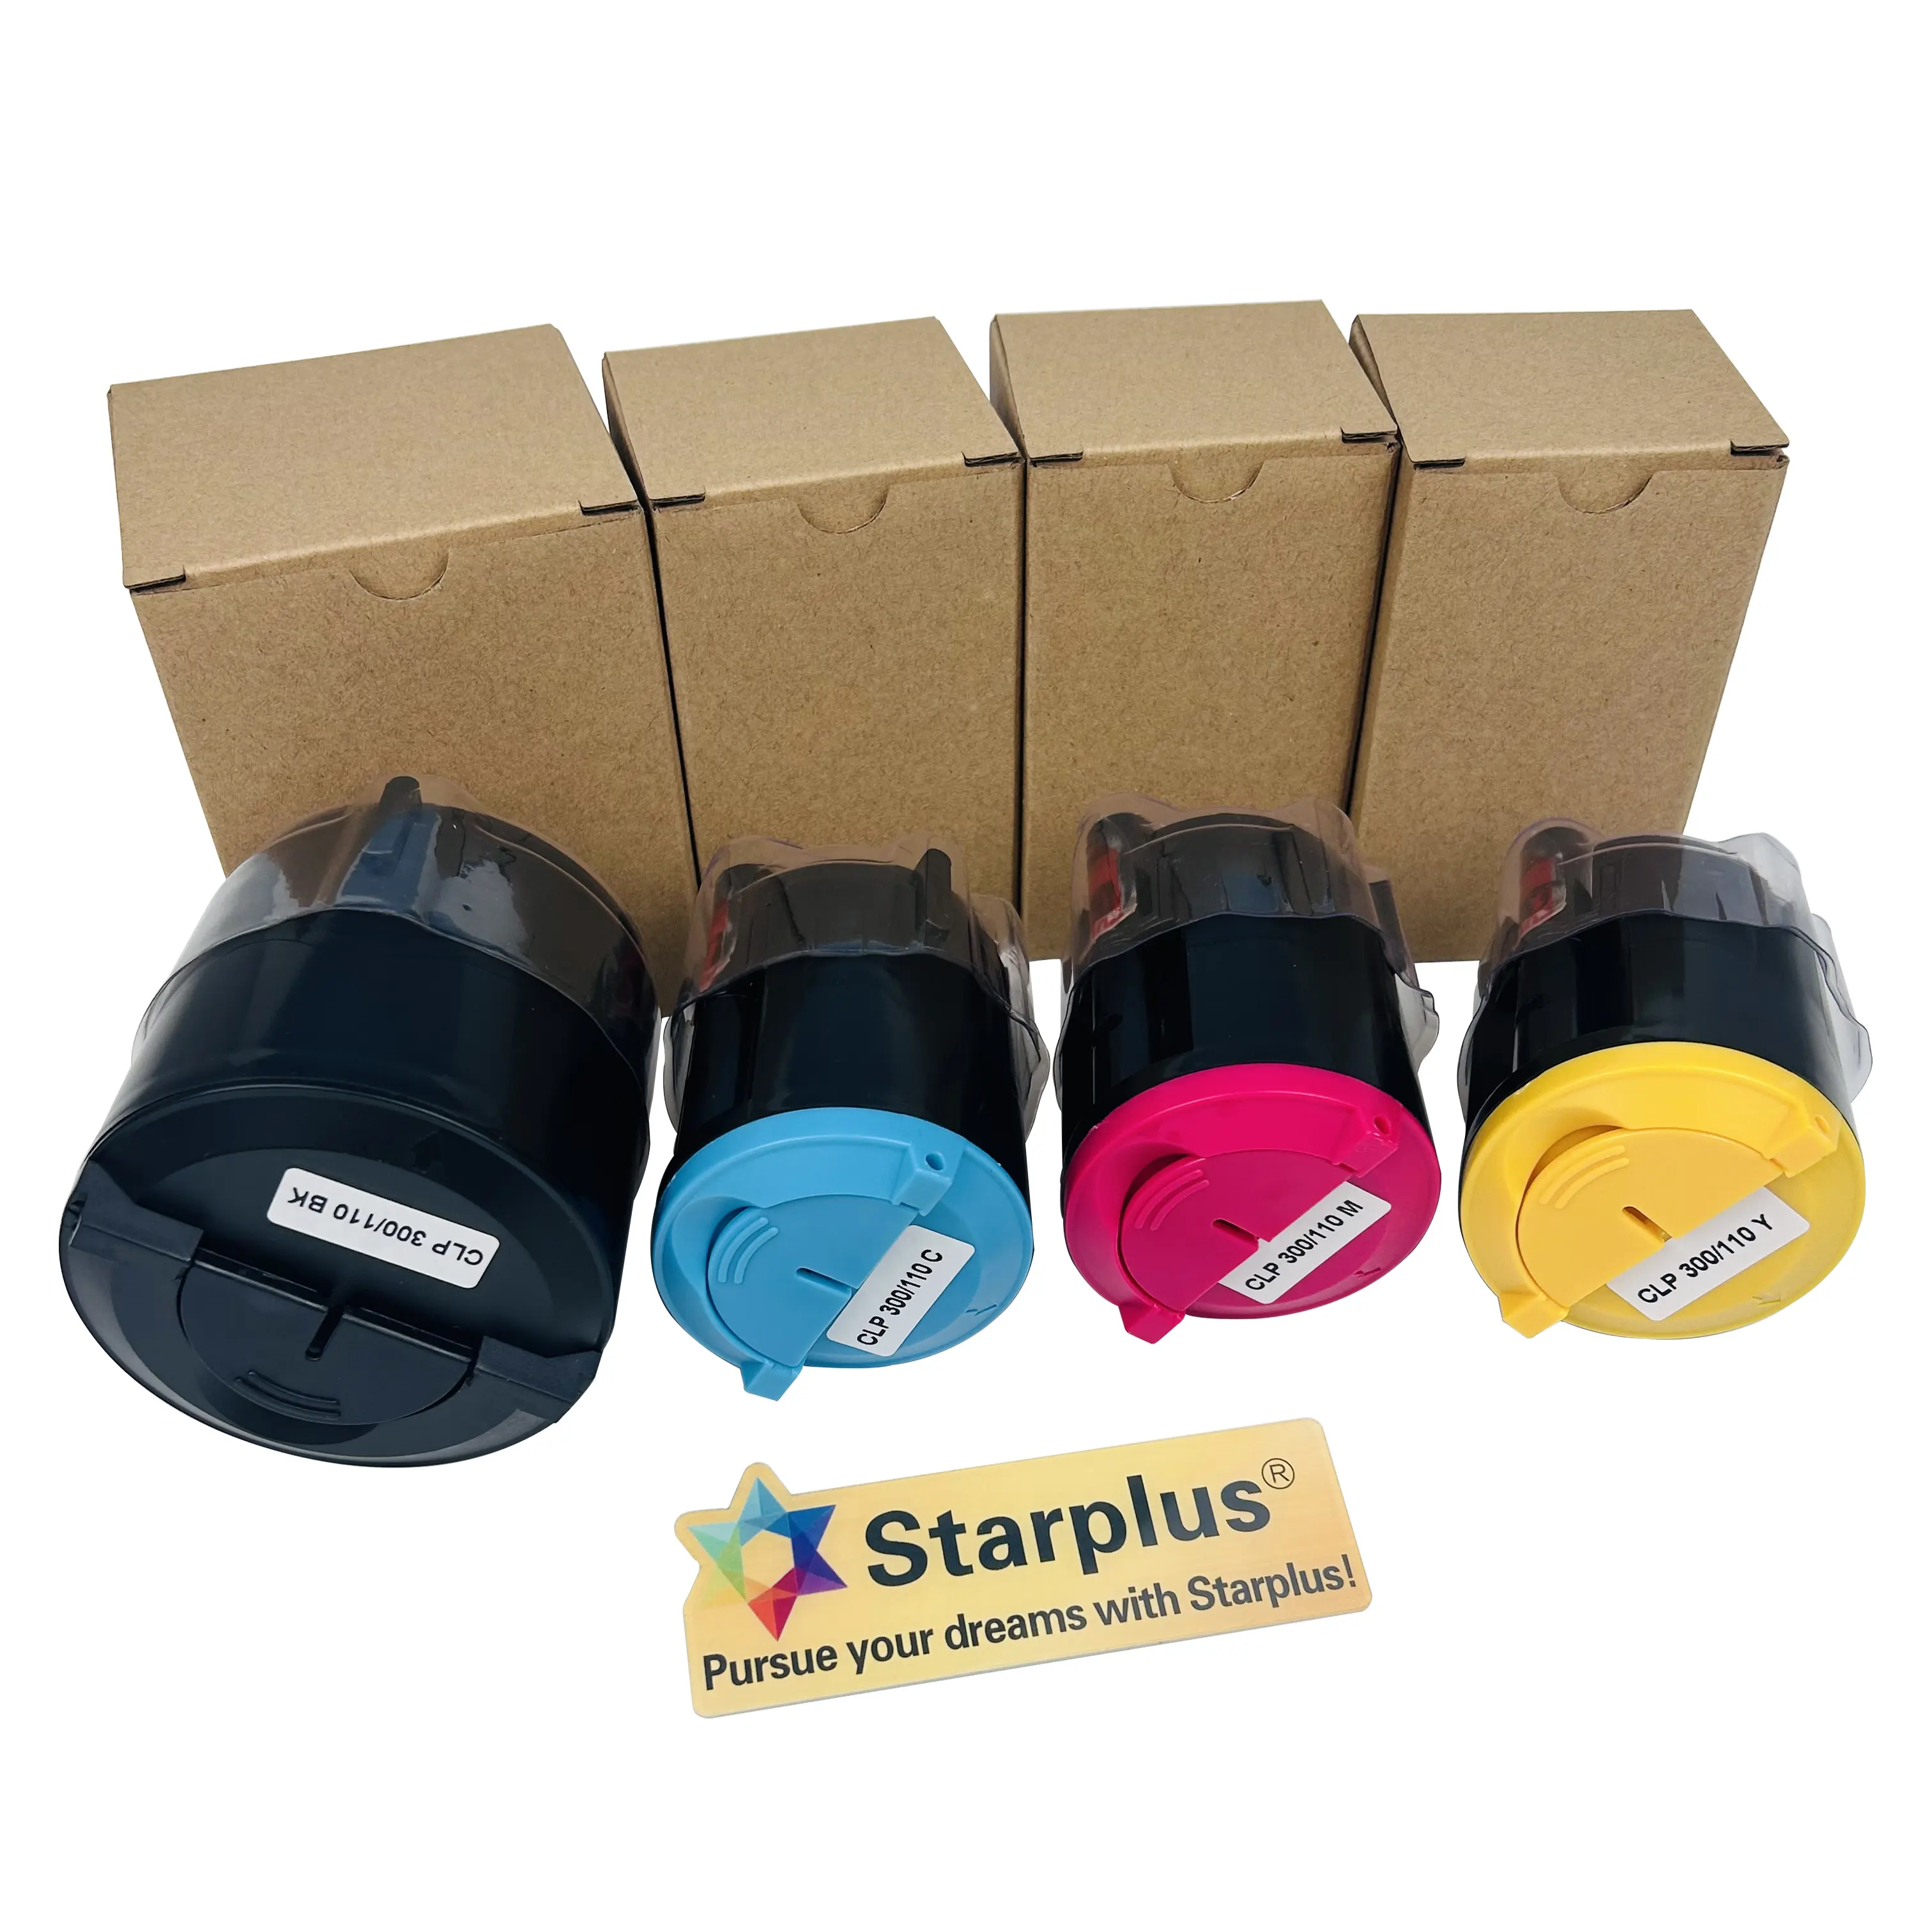 Starplus Color Toner Cartridge CLP300 CLP-300 For Xerox For Samsung CLX-2160 CLP-300 3610 Printer Machine